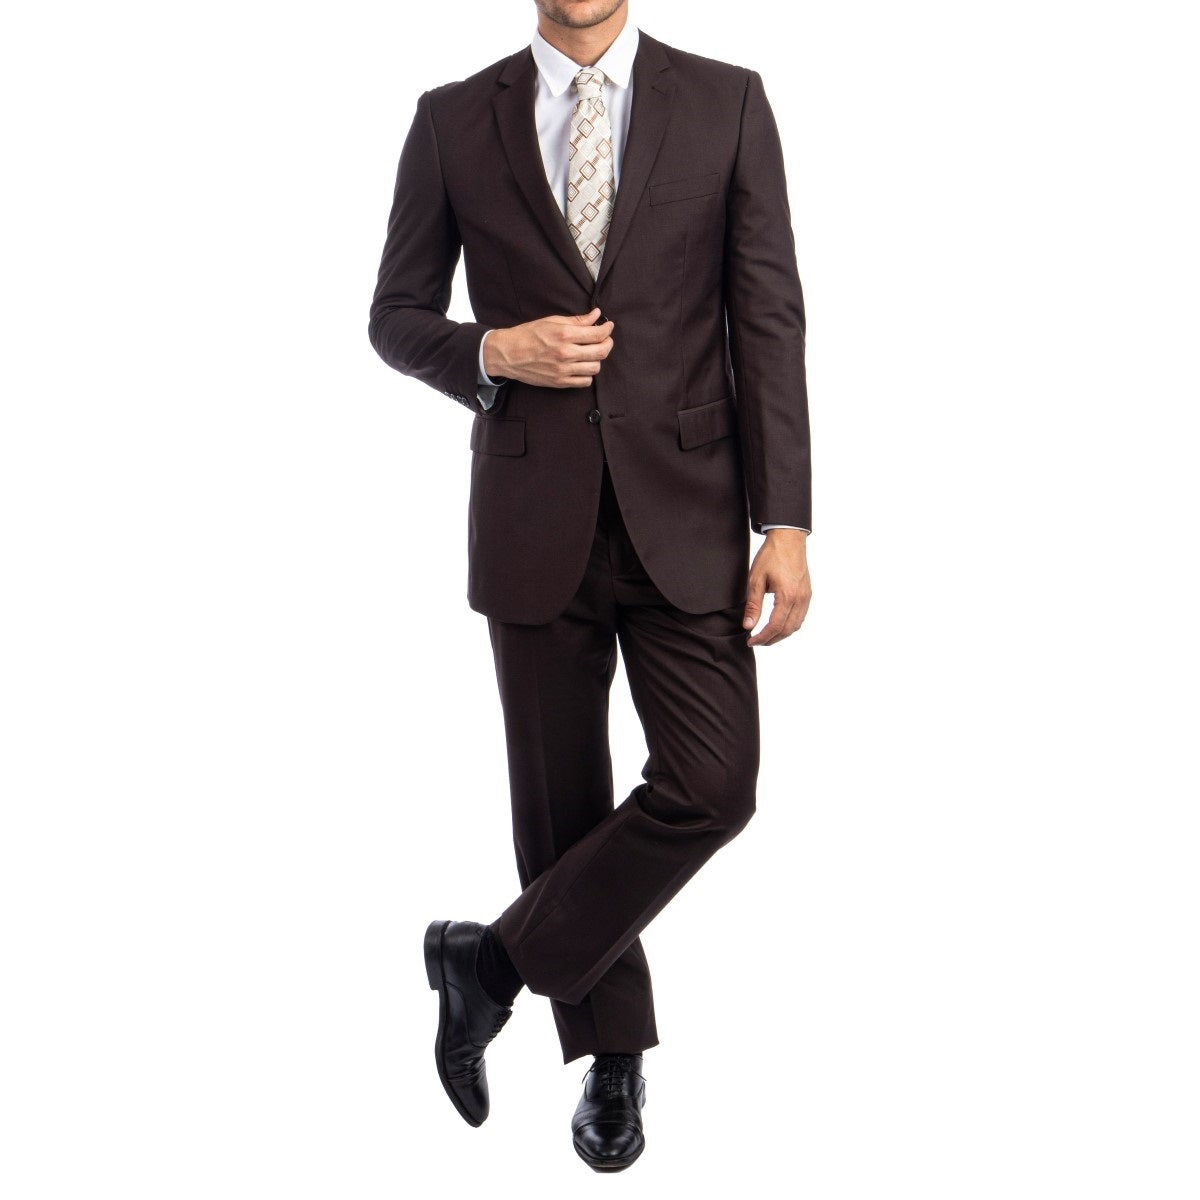 Traje Formal para Hombre TA-M202-23 Brown - Formal Suit for Men